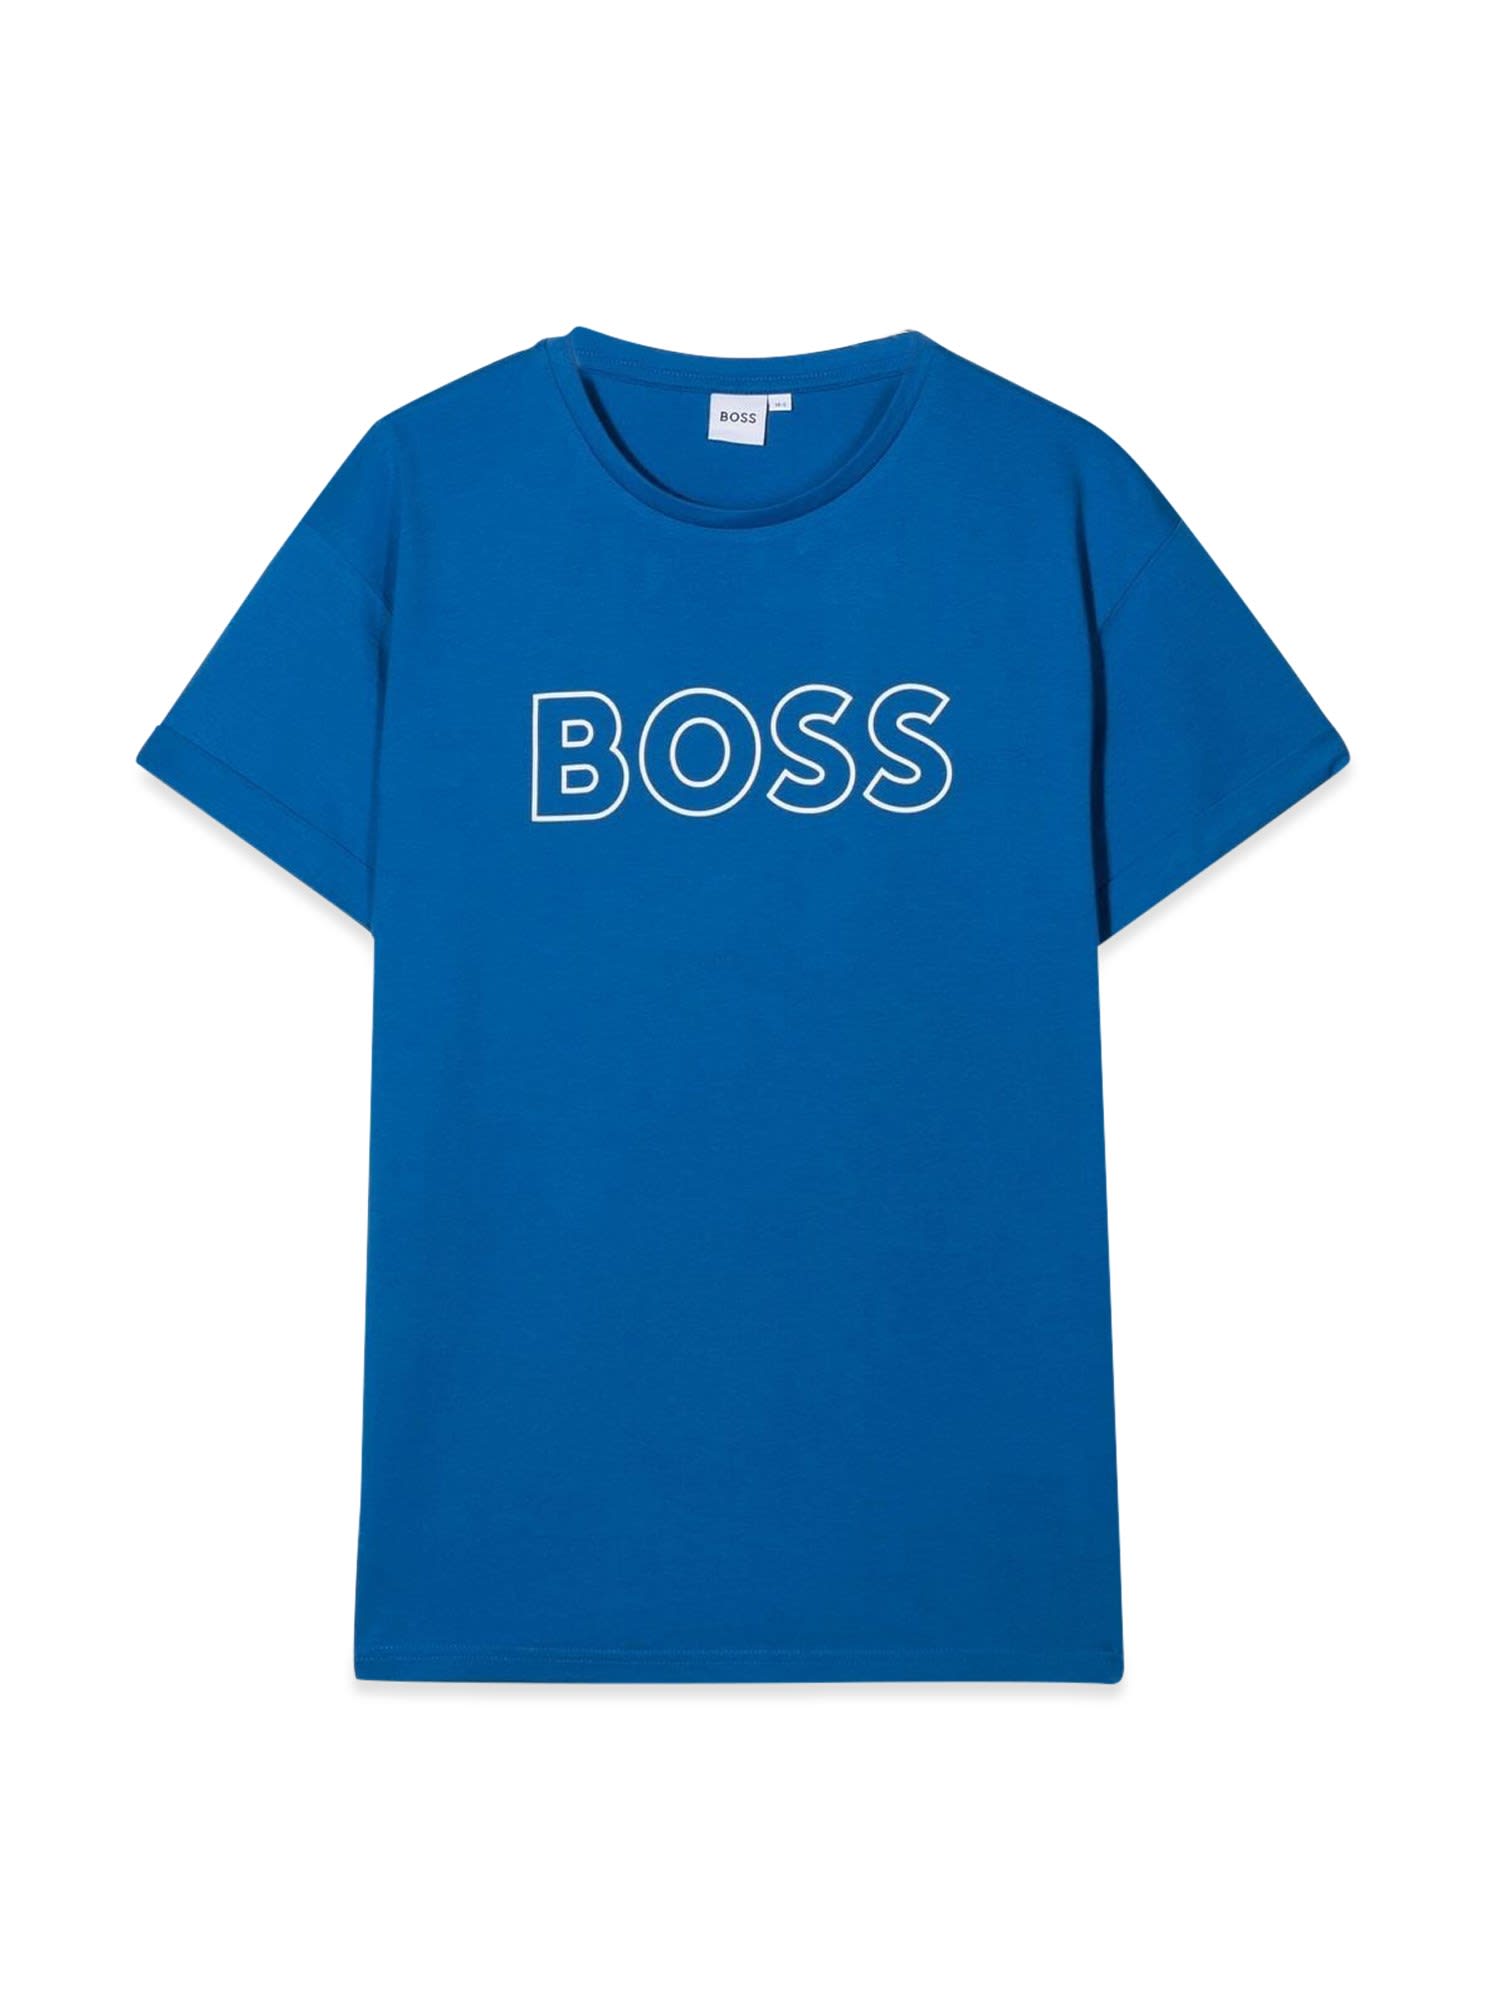 Hugo Boss Tee Shirt